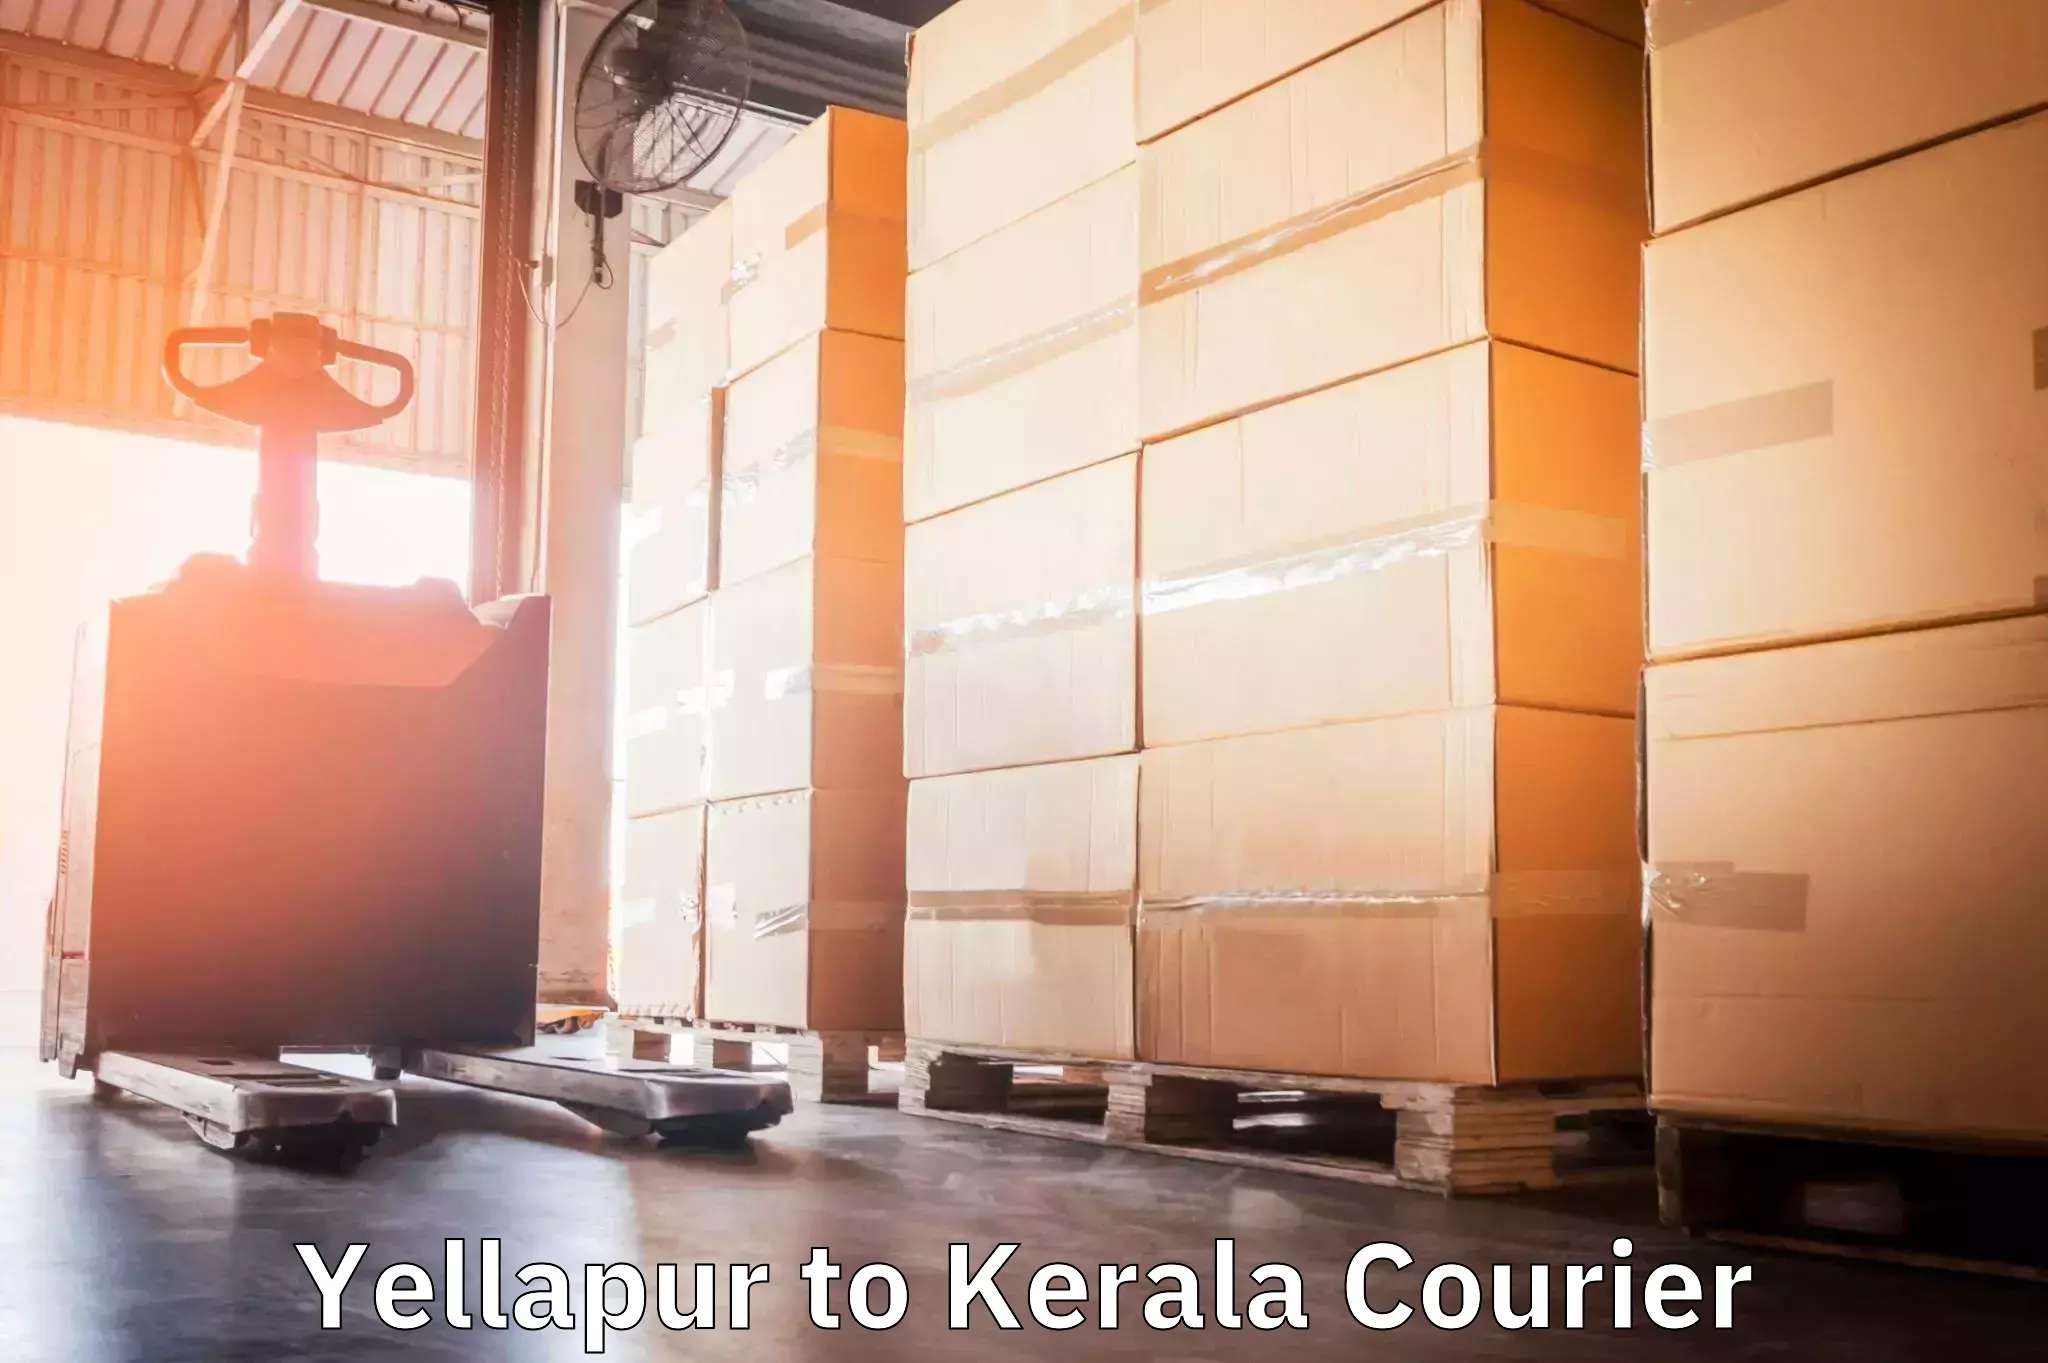 Courier service booking Yellapur to Changanacherry